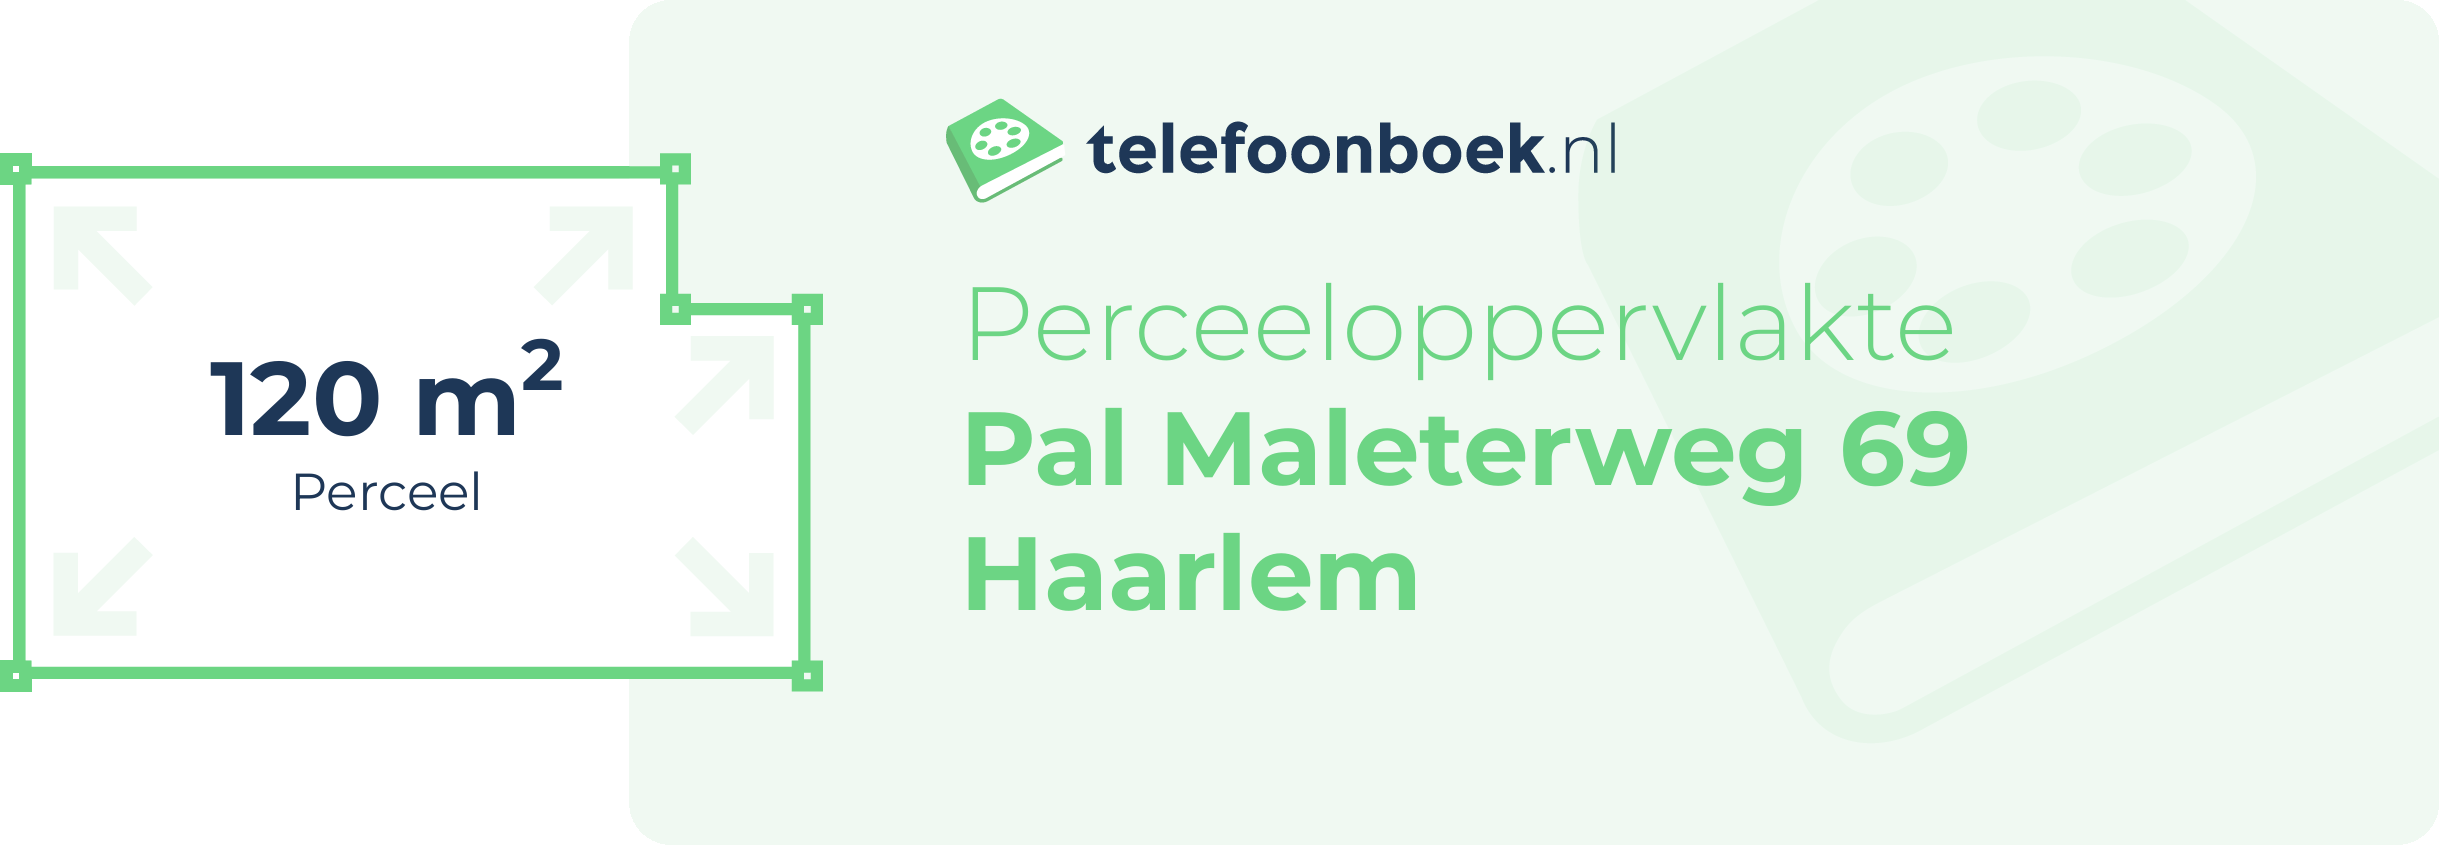 Perceeloppervlakte Pal Maleterweg 69 Haarlem